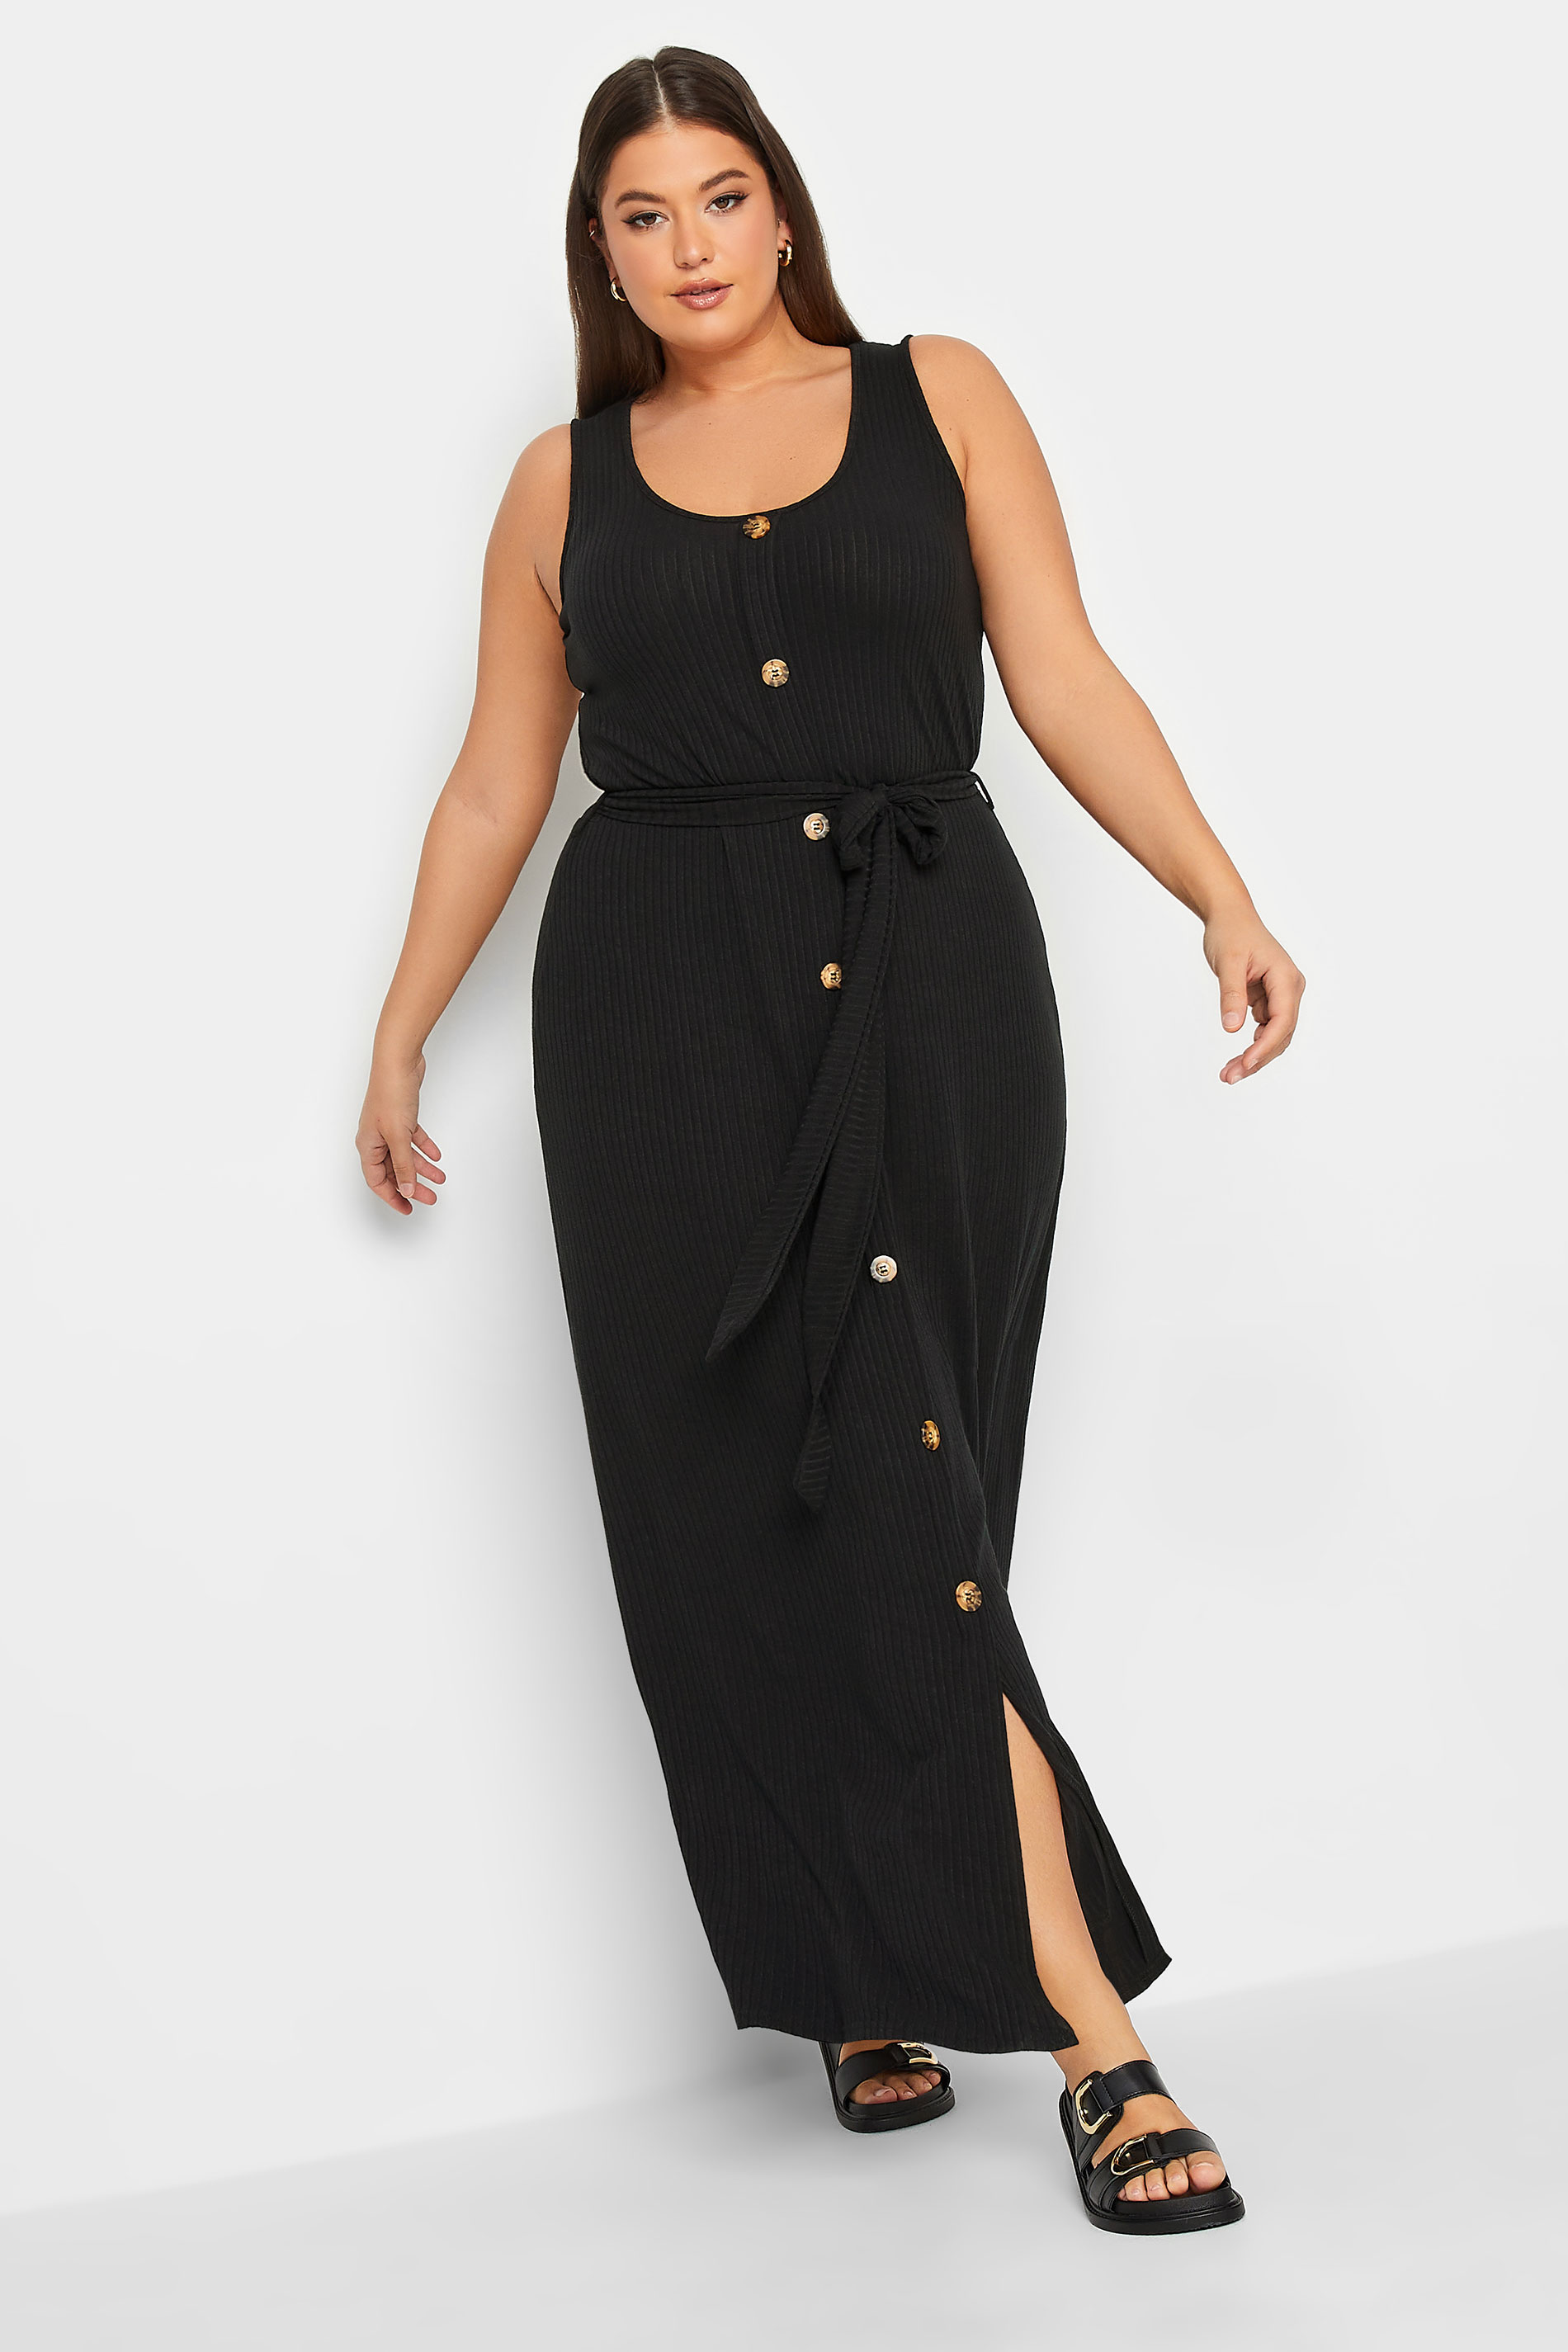 YOURS Plus Size Black Ribbed Sleeveless Maxi Dress | Yours Clothing 2